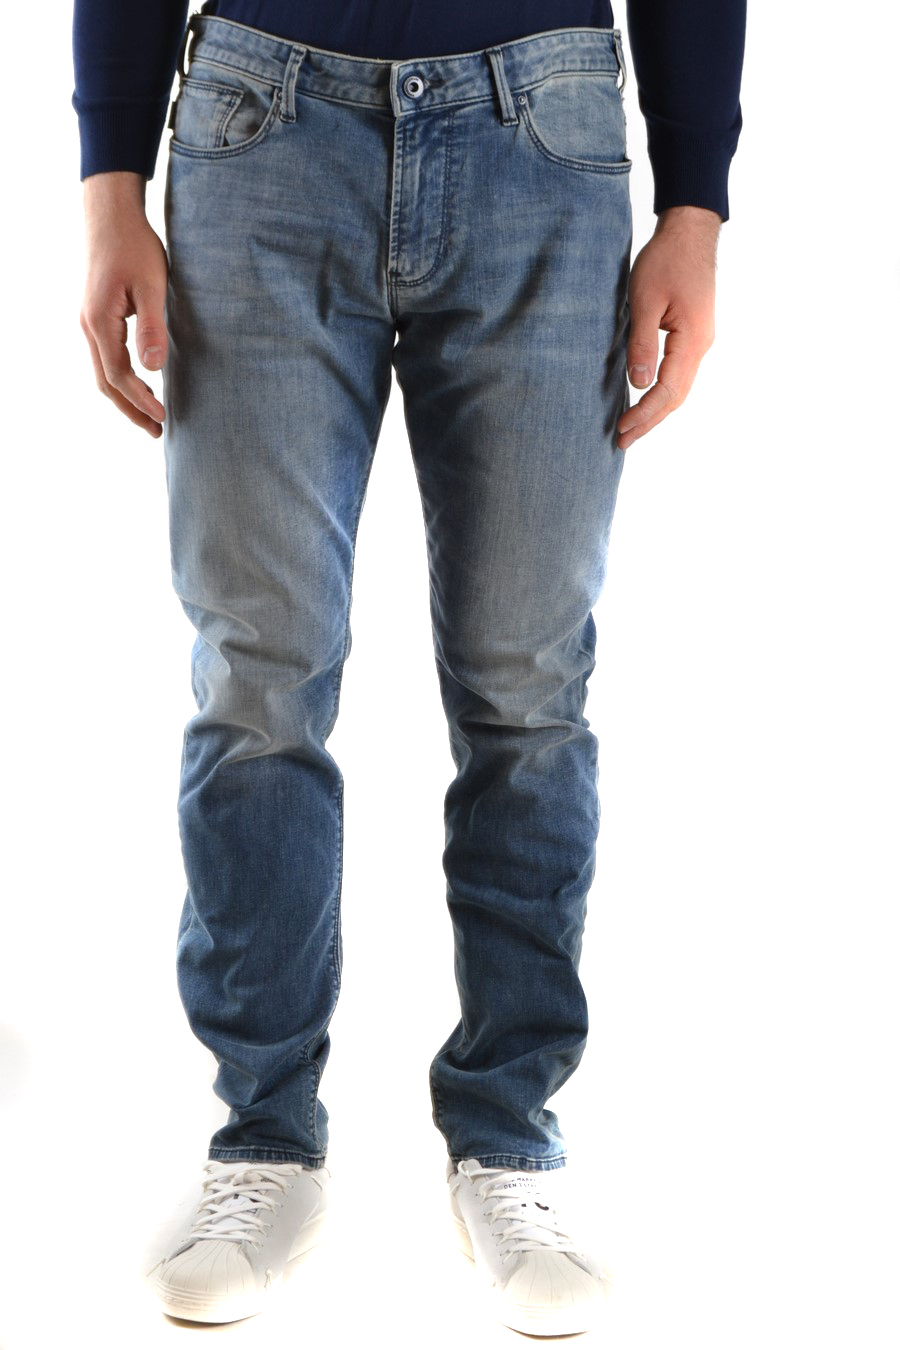 EMPORIO ARMANI Jeans | ViganoBoutique.com